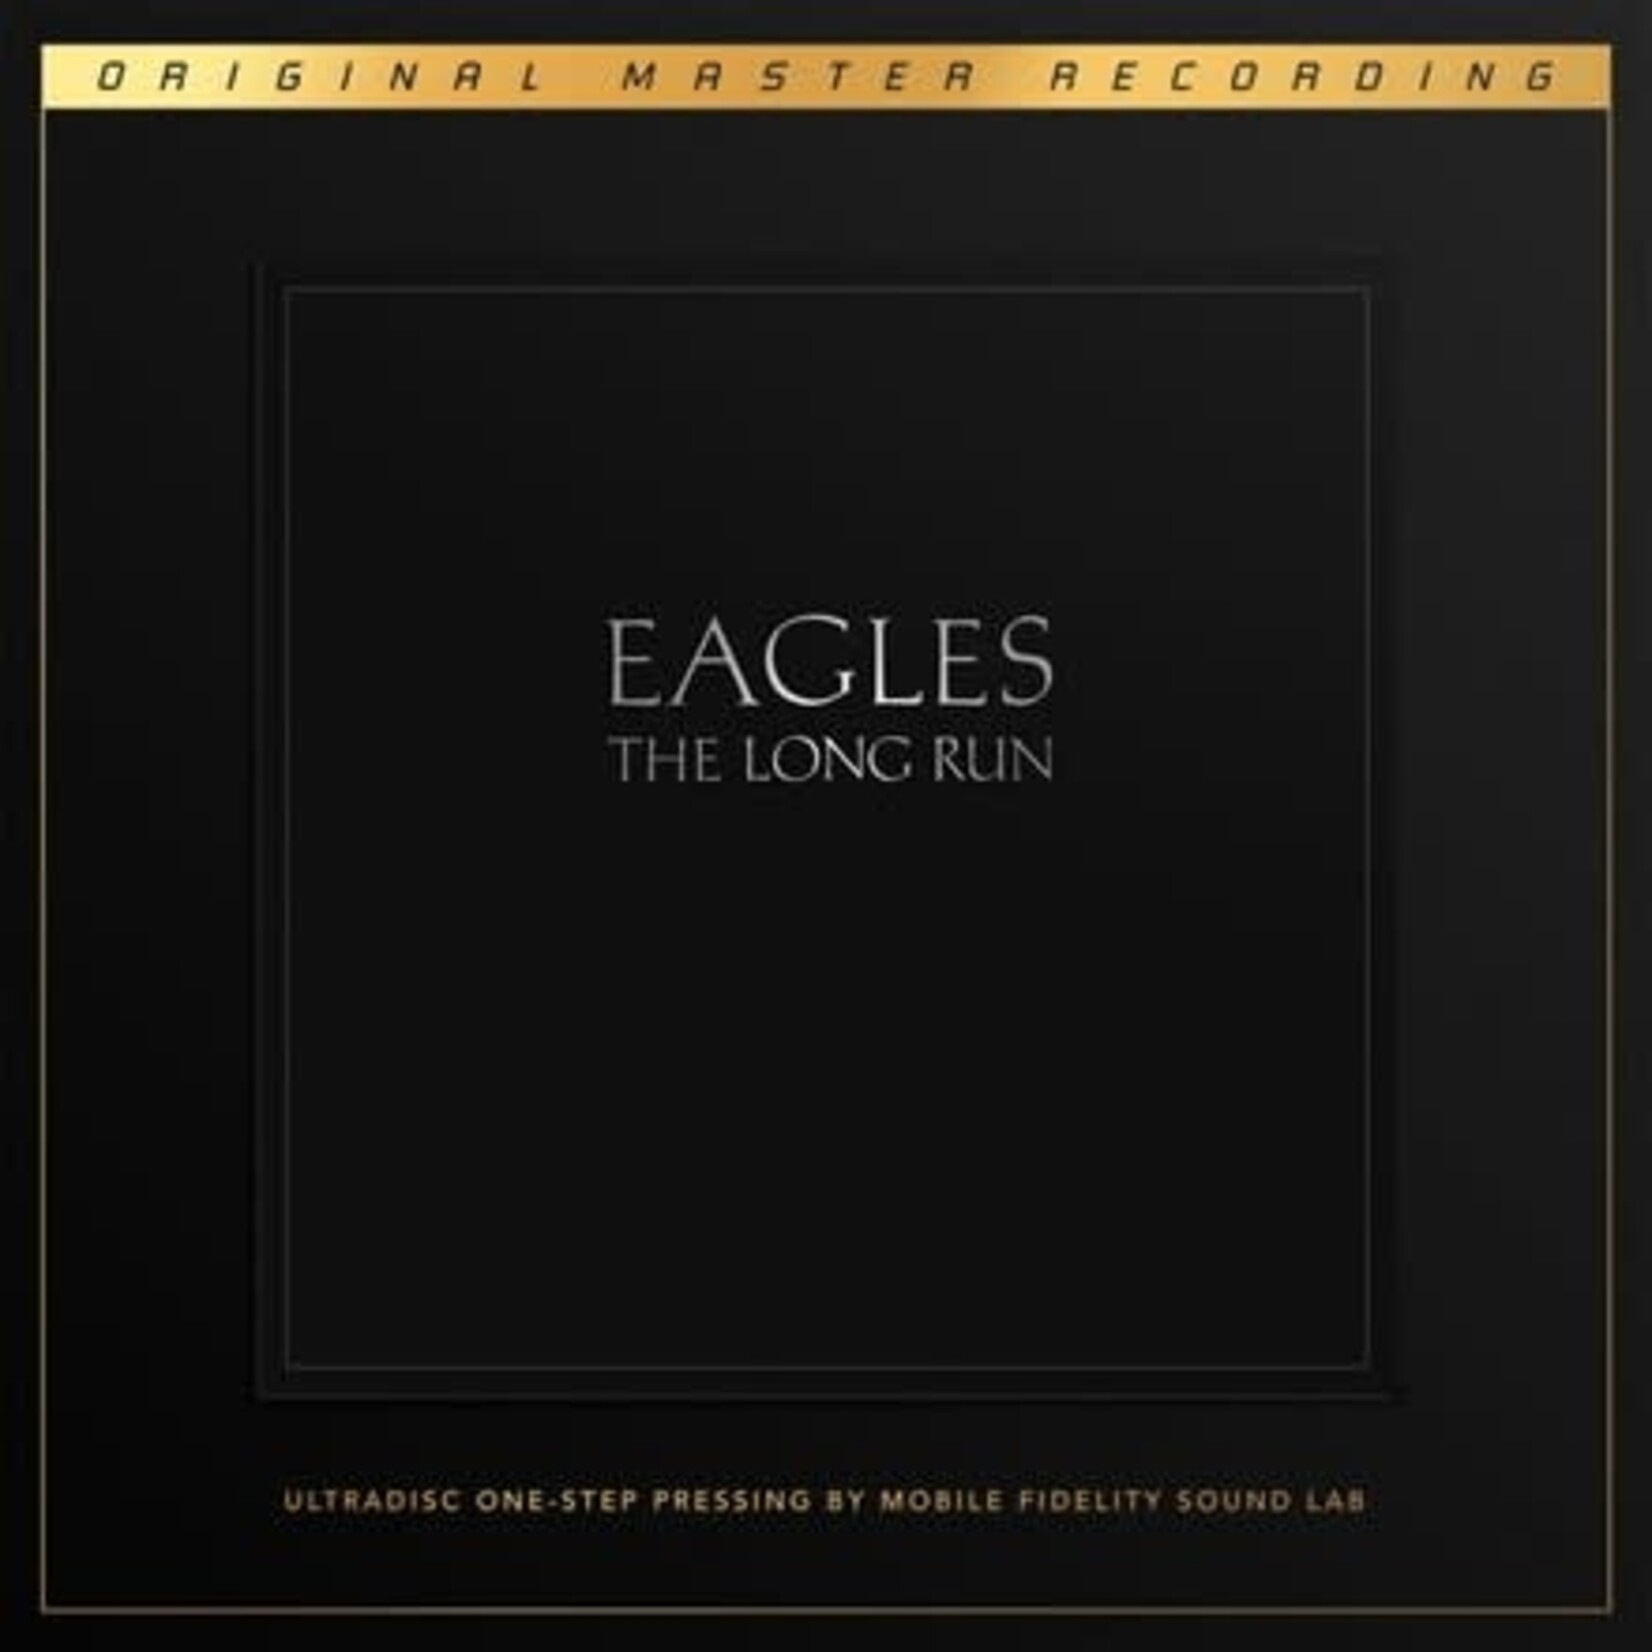 [New] Eagles - The Long Run (2LP, ultradisc one-step)